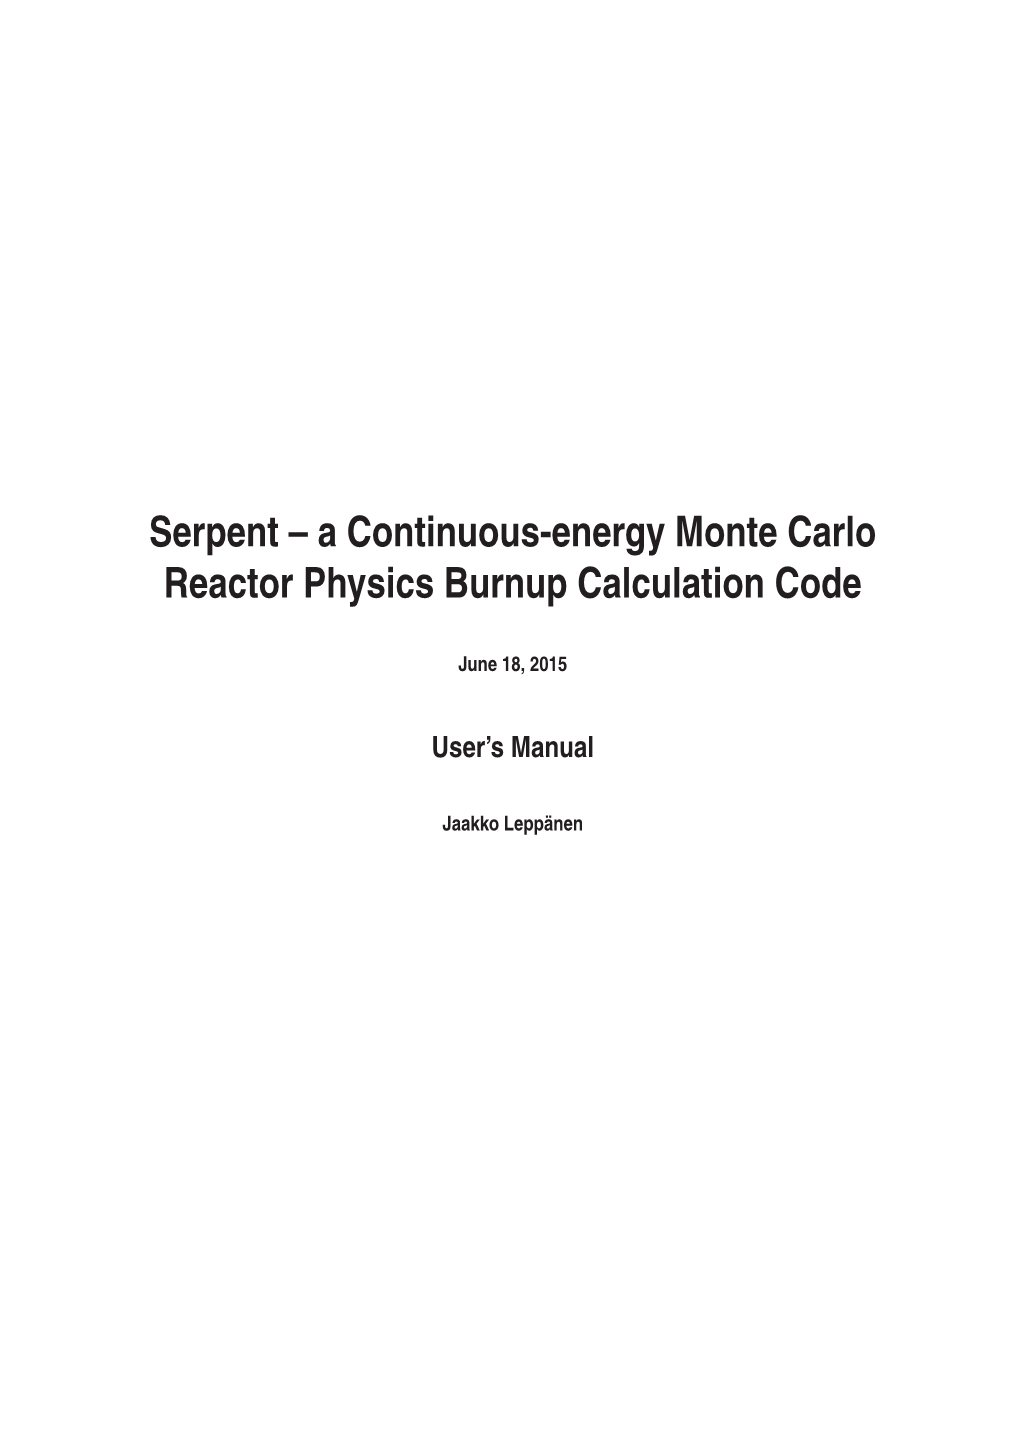 A Continuous-Energy Monte Carlo Reactor Physics Burnup Calculation Code